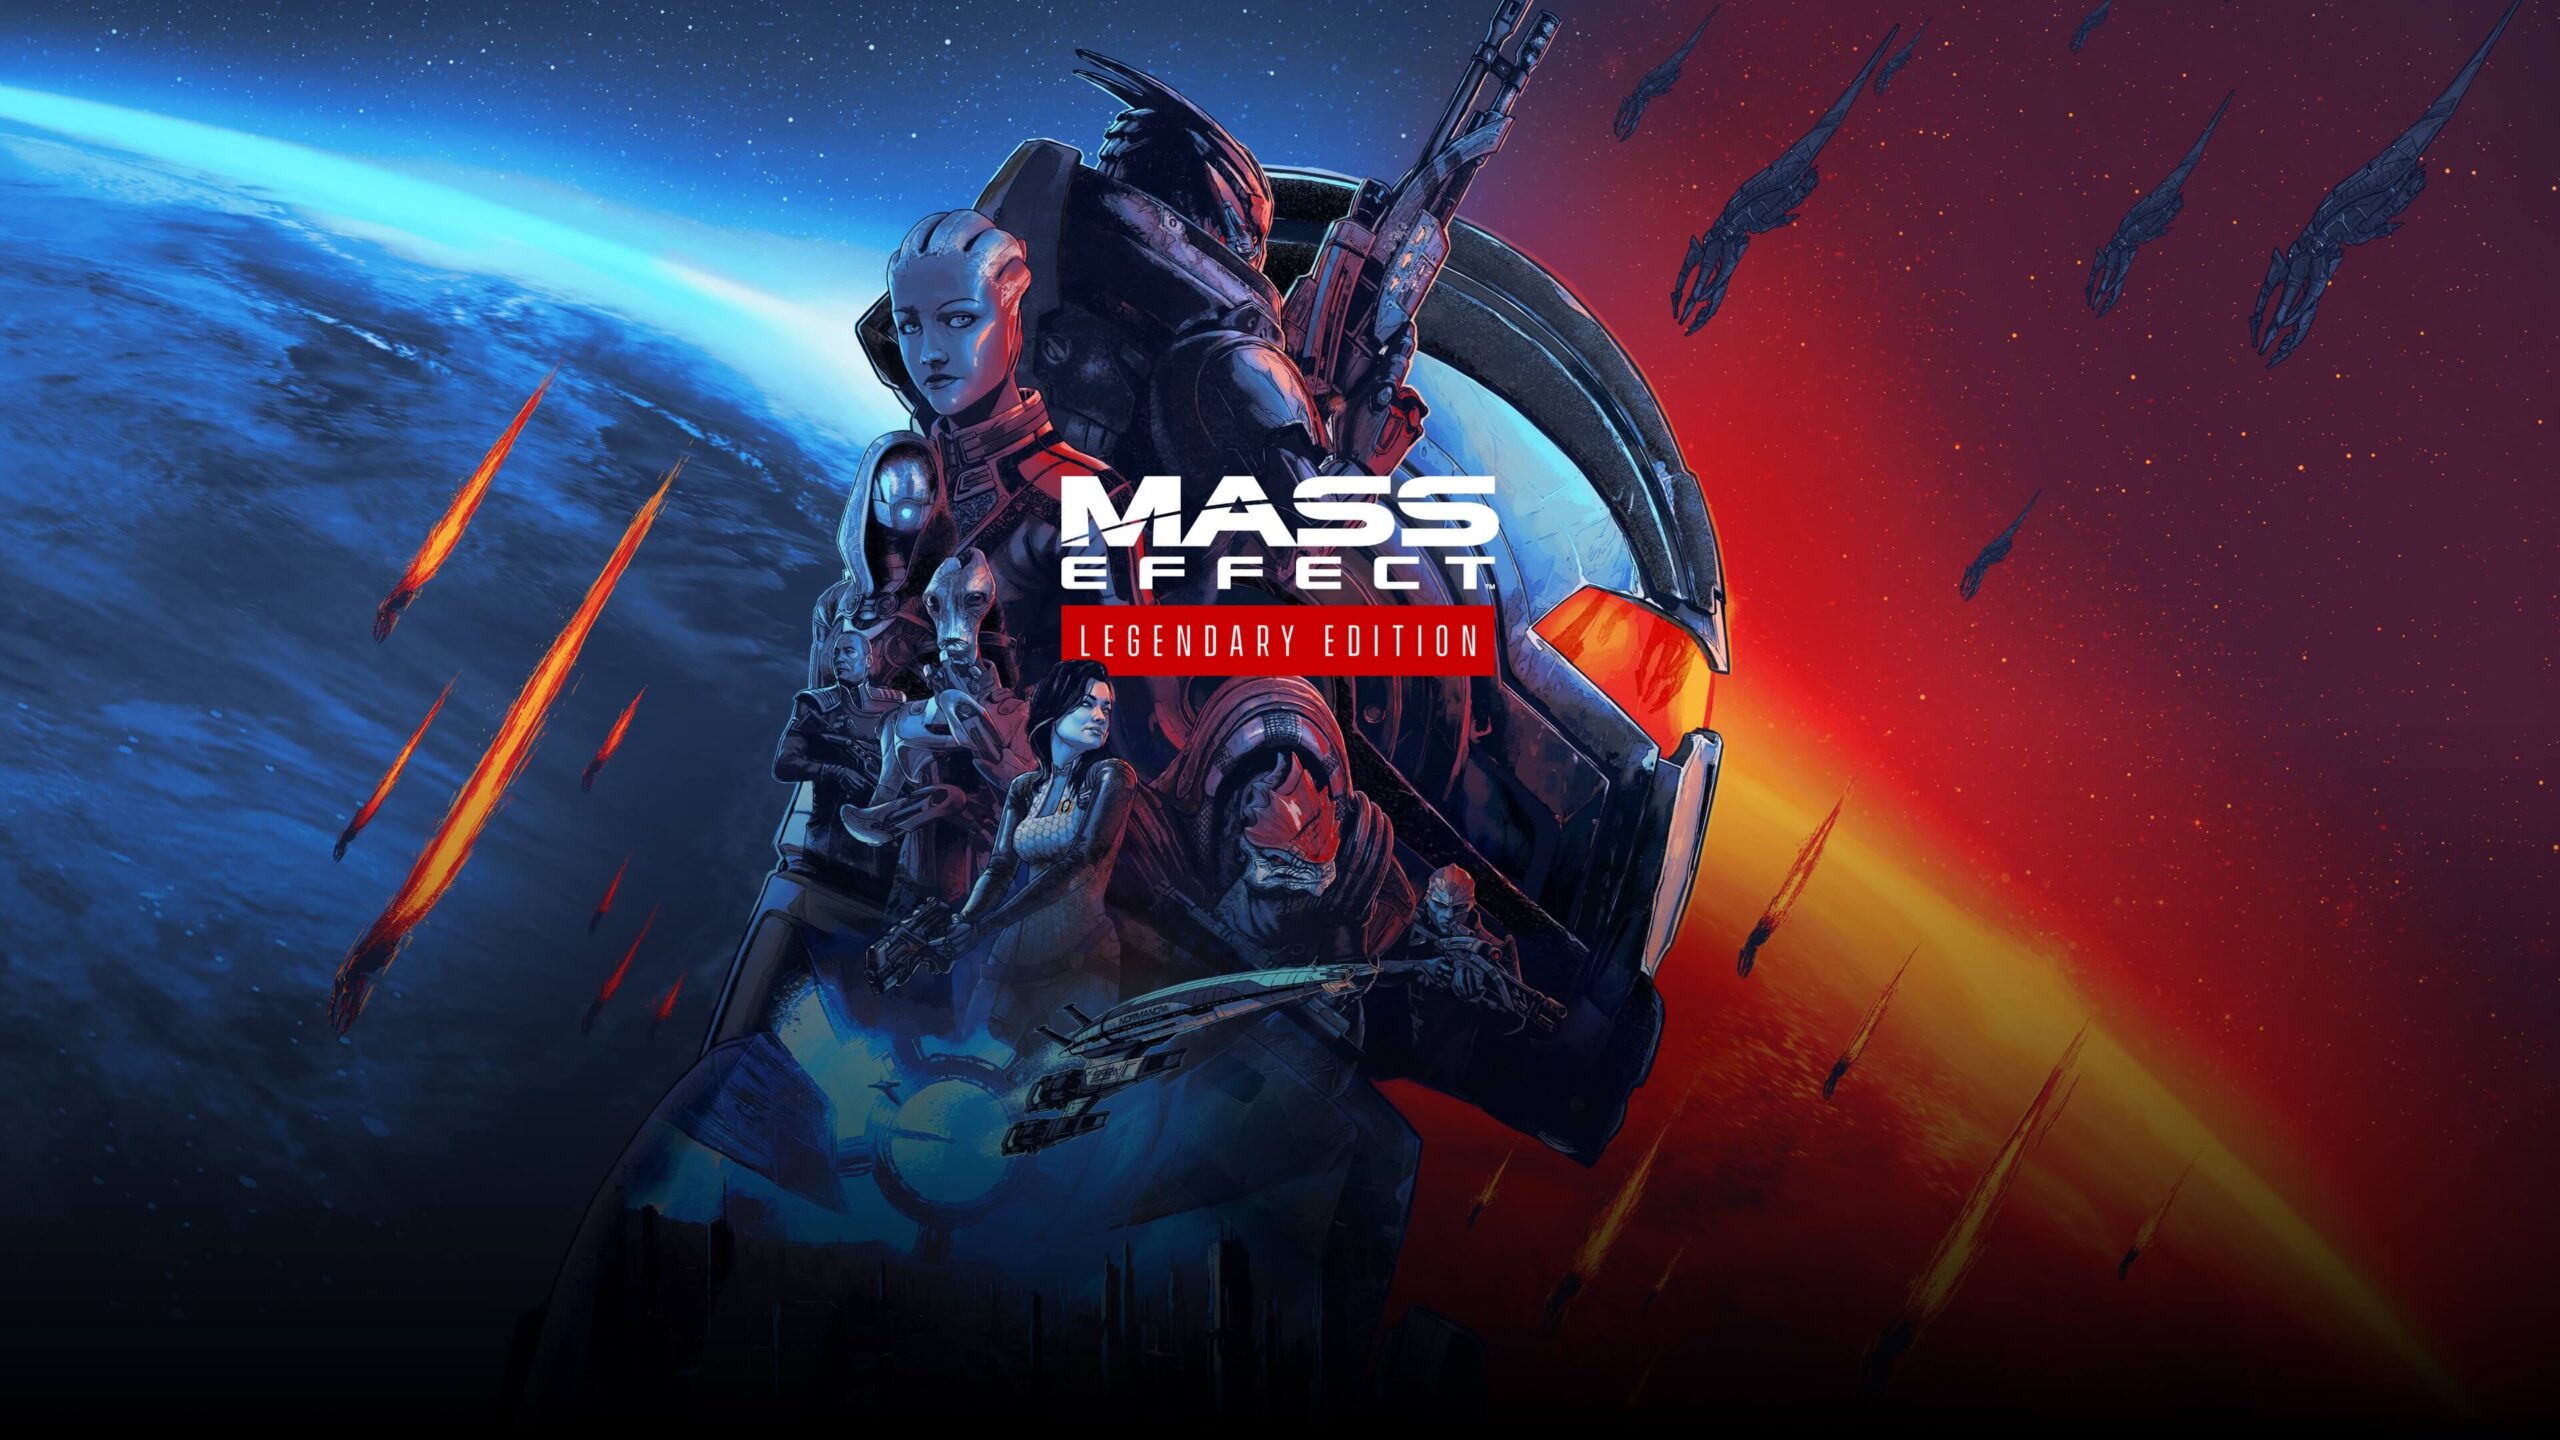 Mass-Effect-Legendary-Edition-Anuncio-Union-Cosmos-scaled.jpg